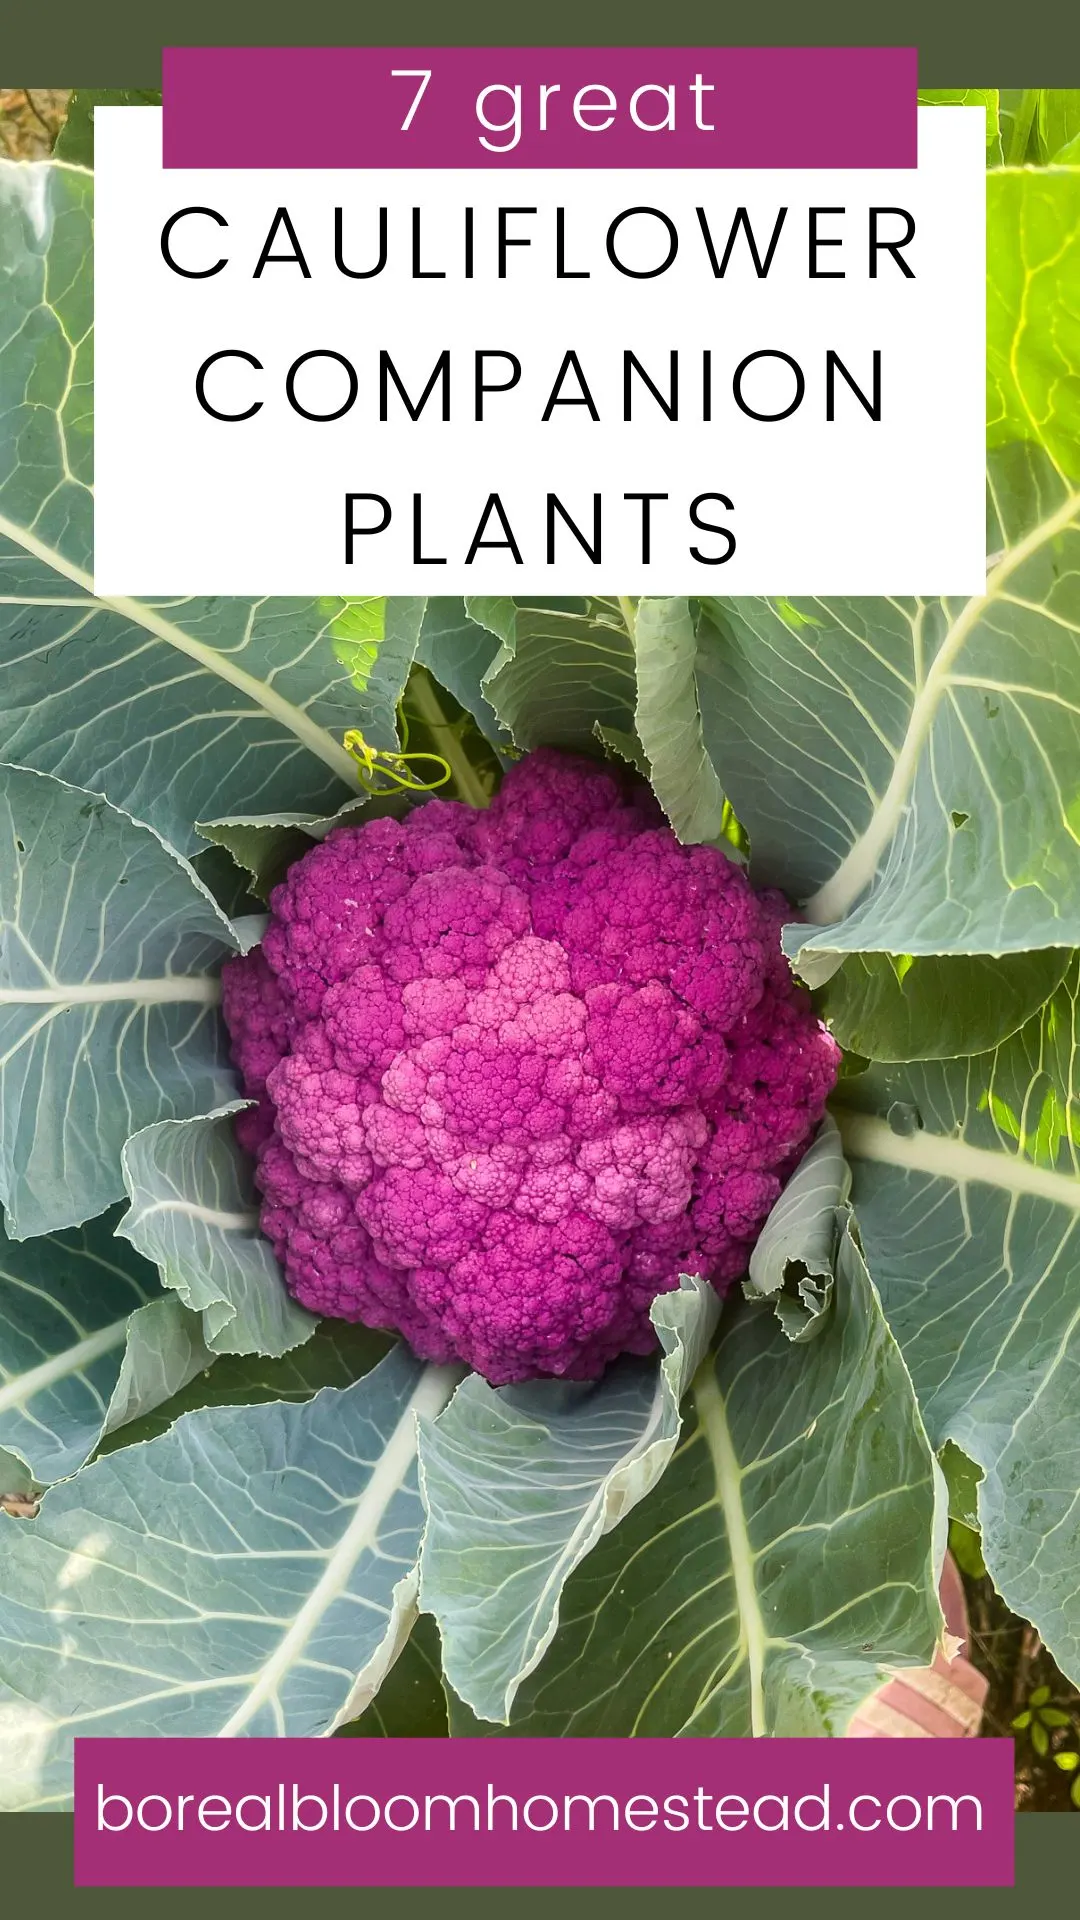 Cauliflower companion plants pinterest graphic. 